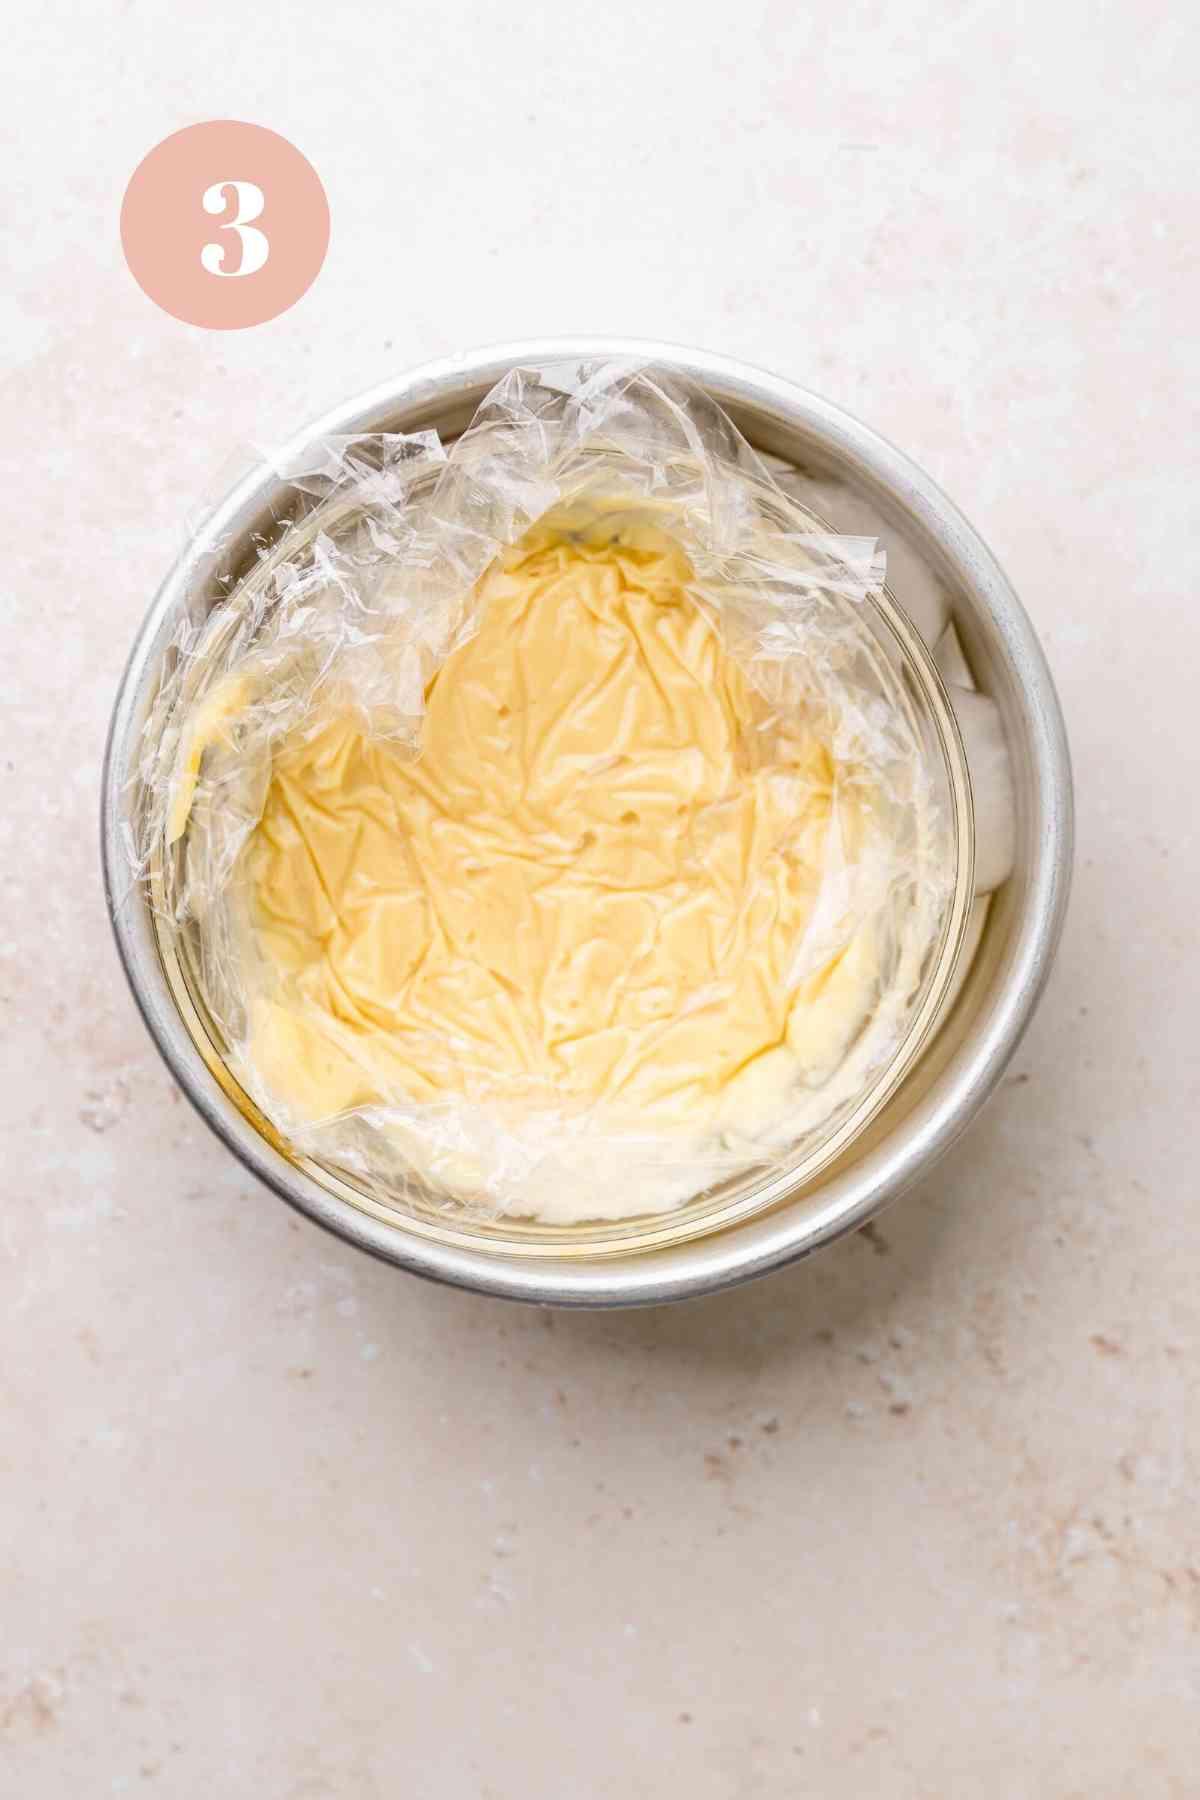 the vanilla custard cooling in an ice bath for the banana macarons.